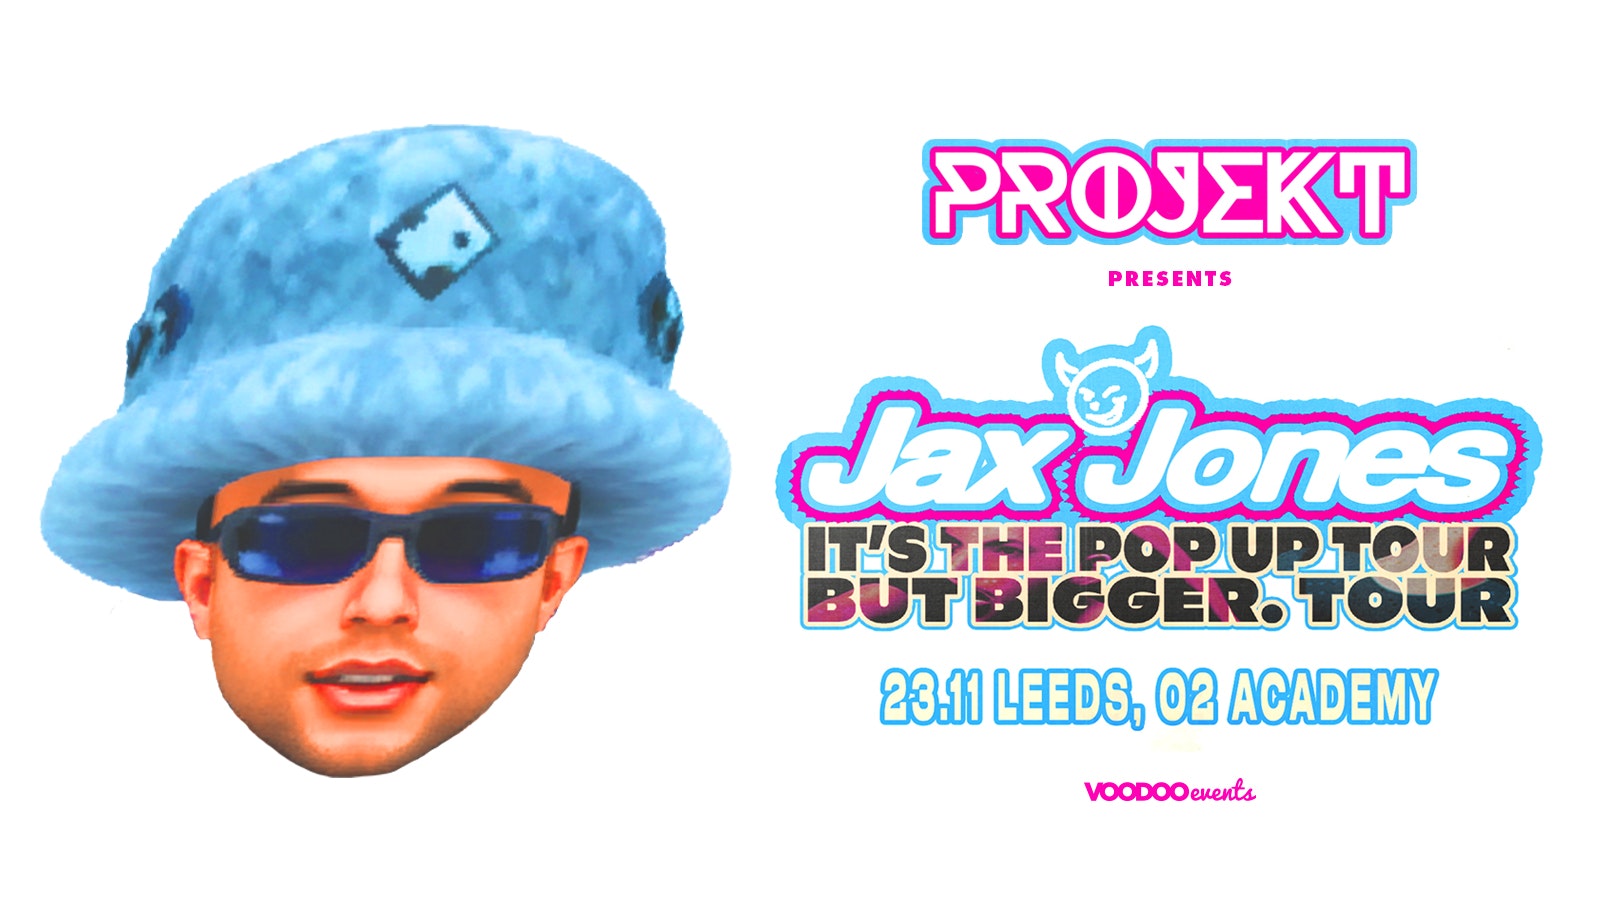 Projekt Presents Jax Jones Saturday 23rd NOVEMBER